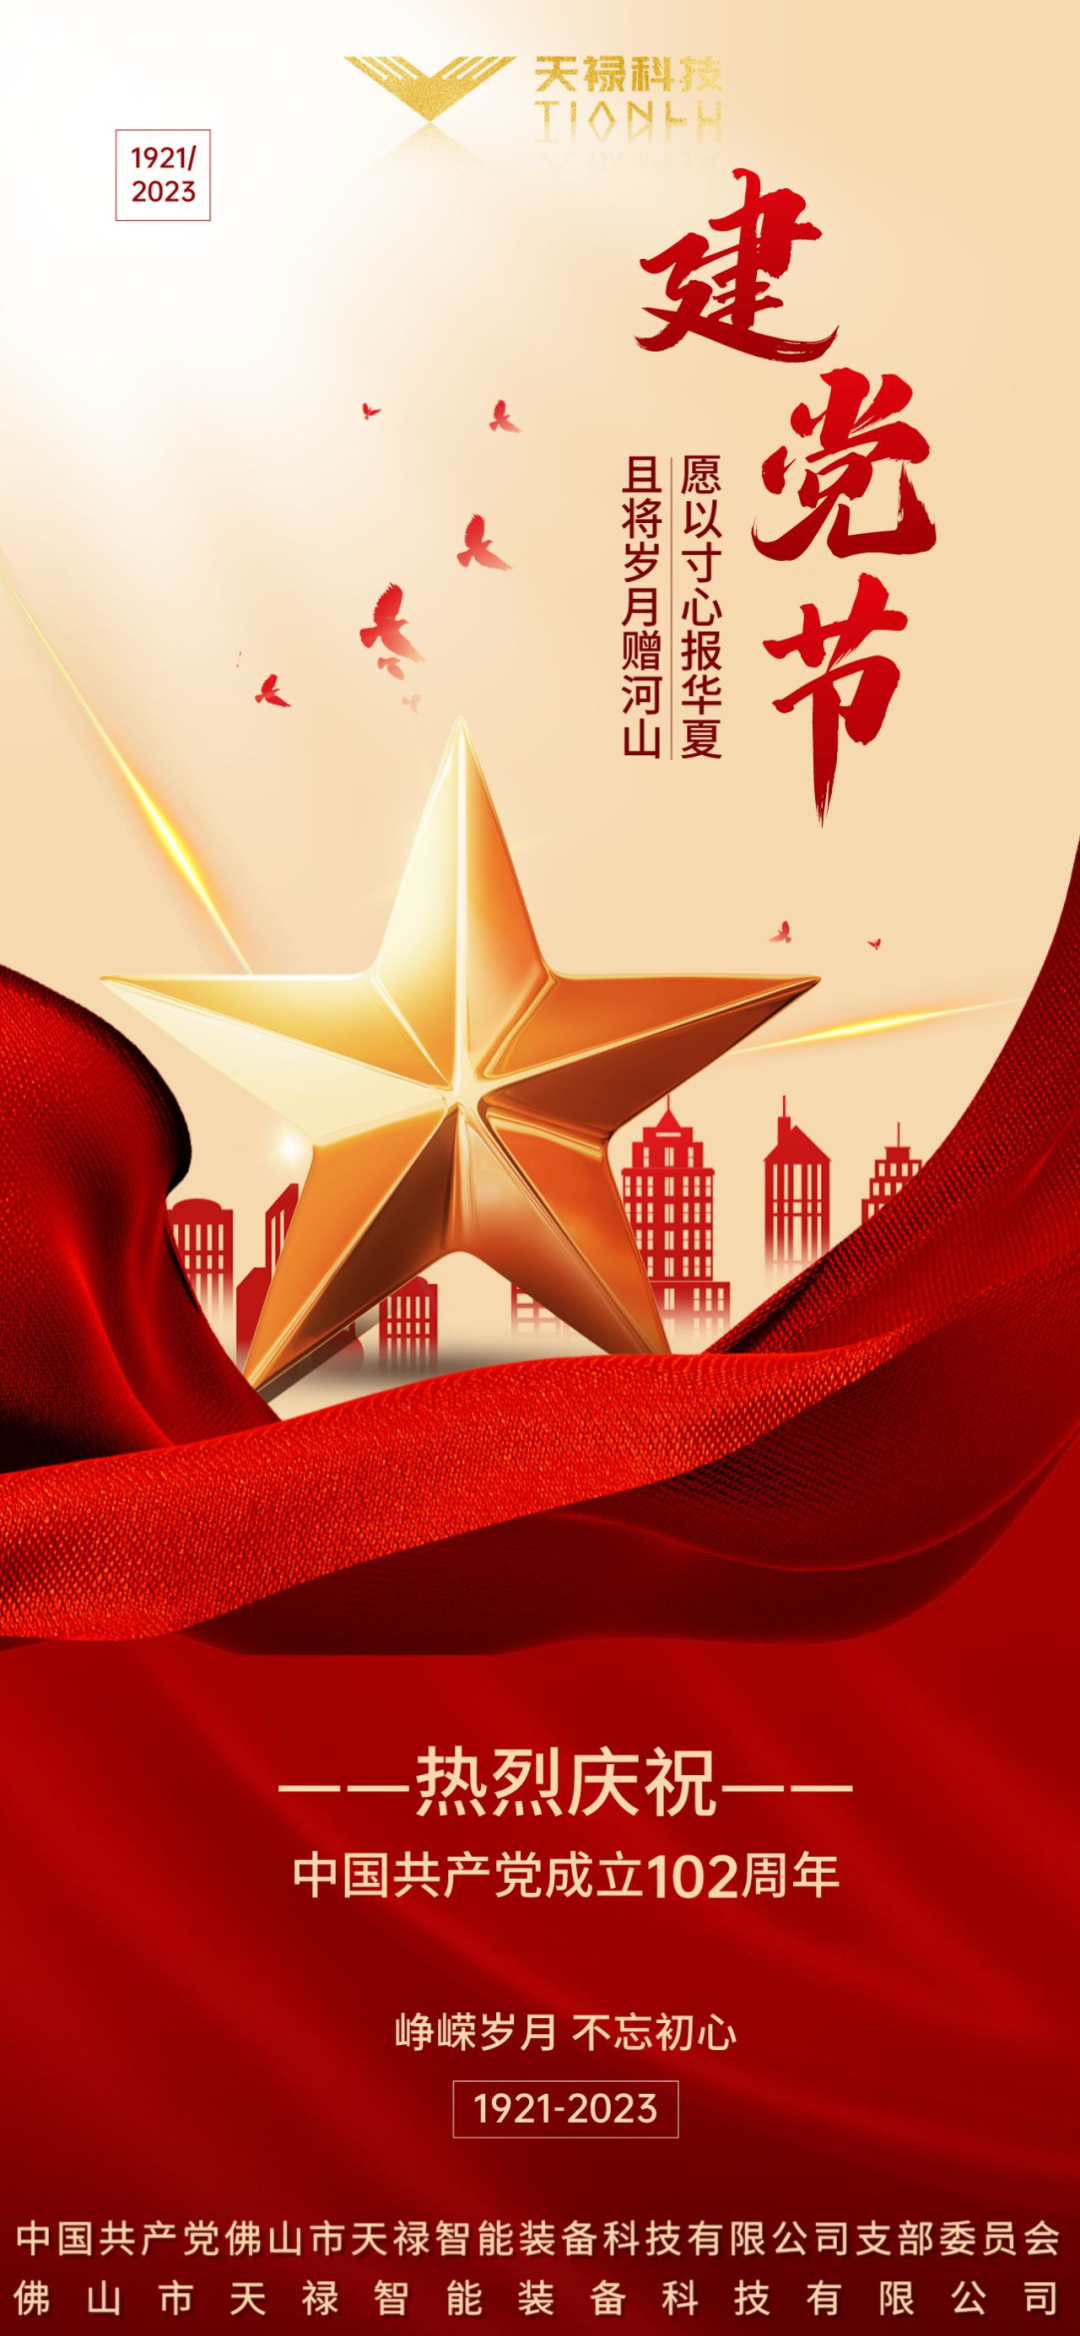 home88—必发丨热烈祝贺中国共产党成立102周年 